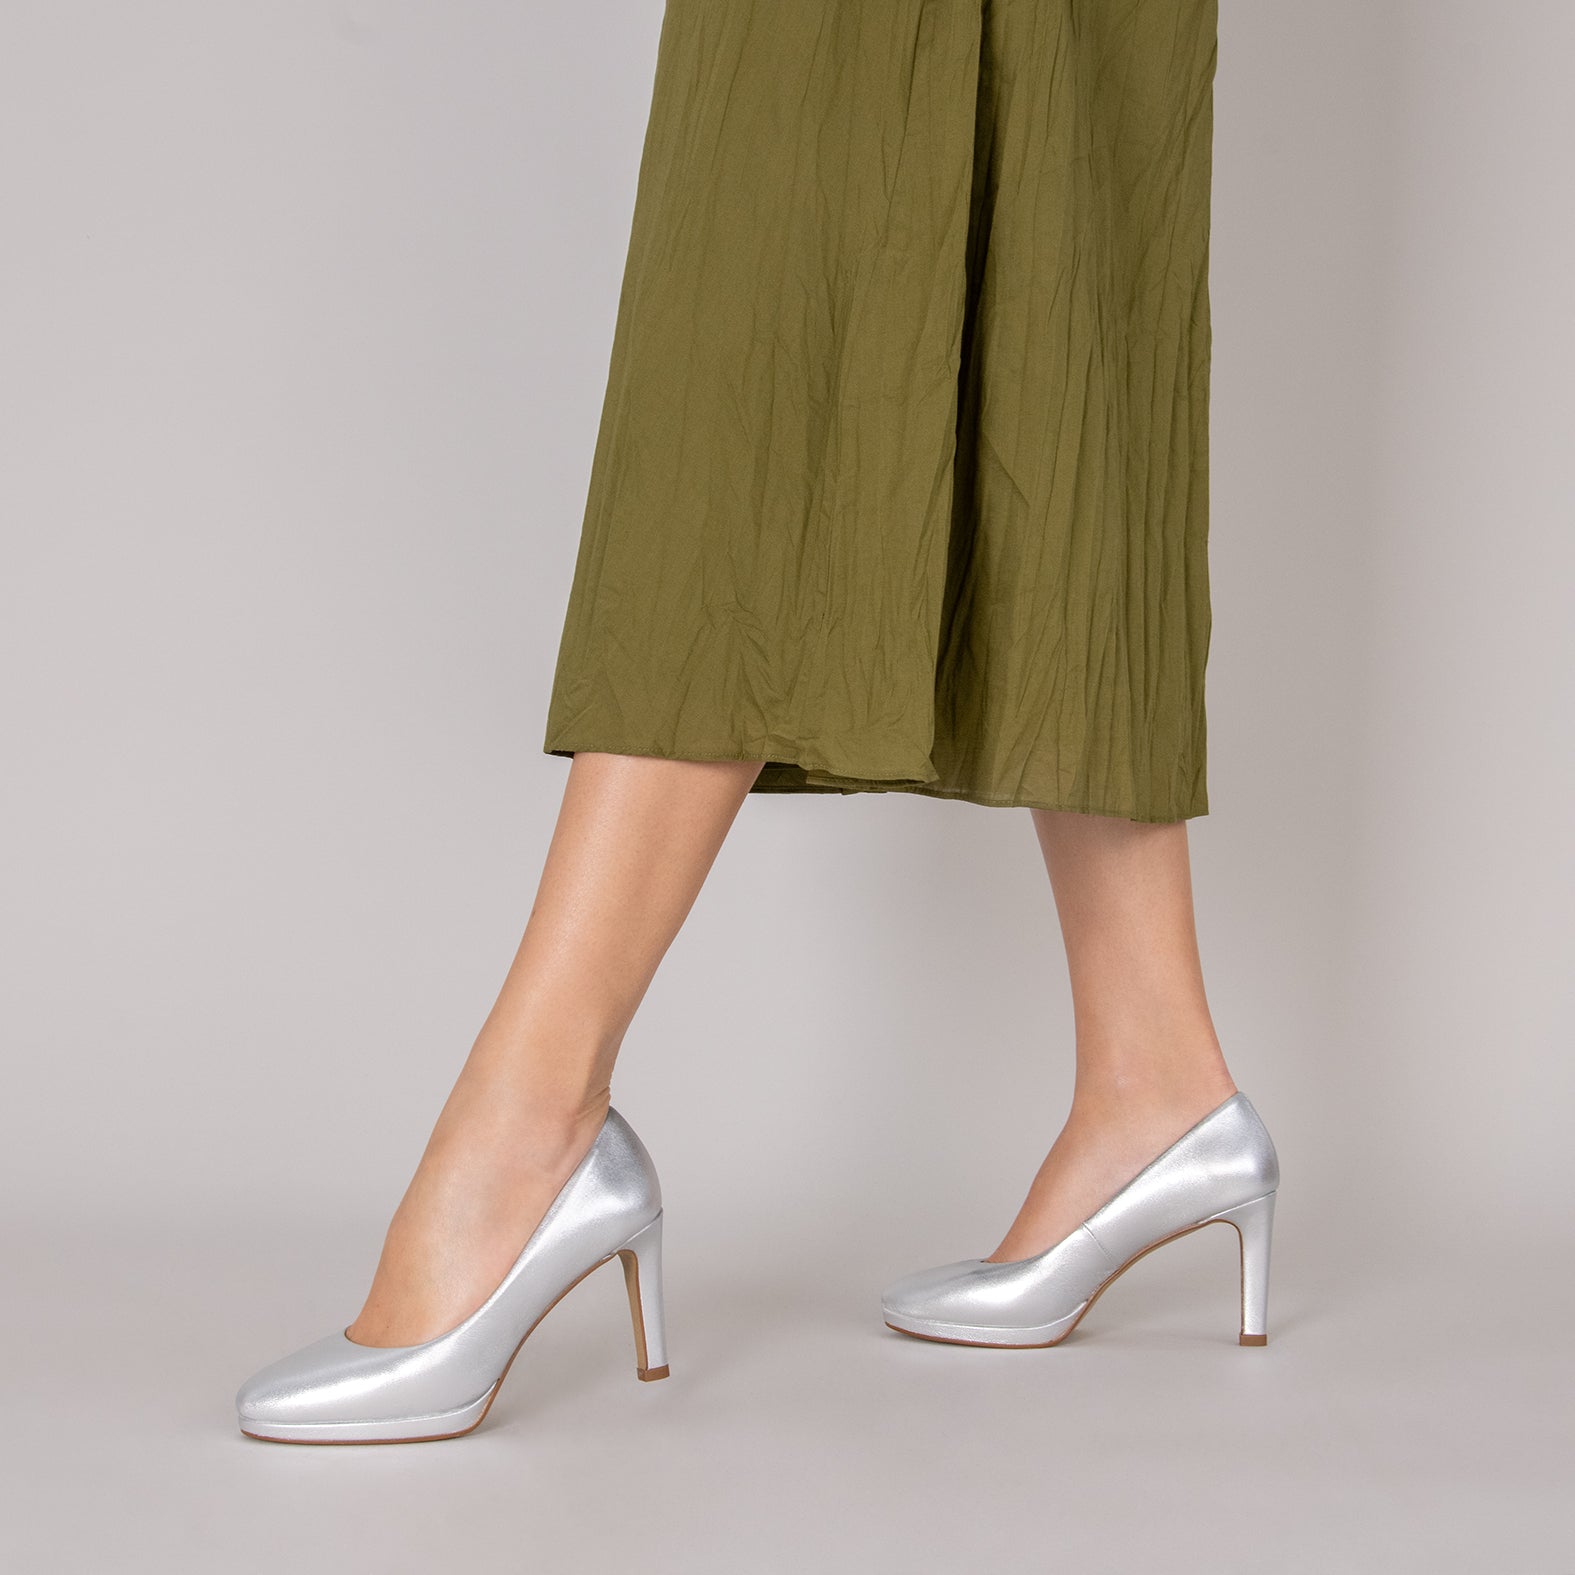 PLATFORM – SILVER high heels with platform